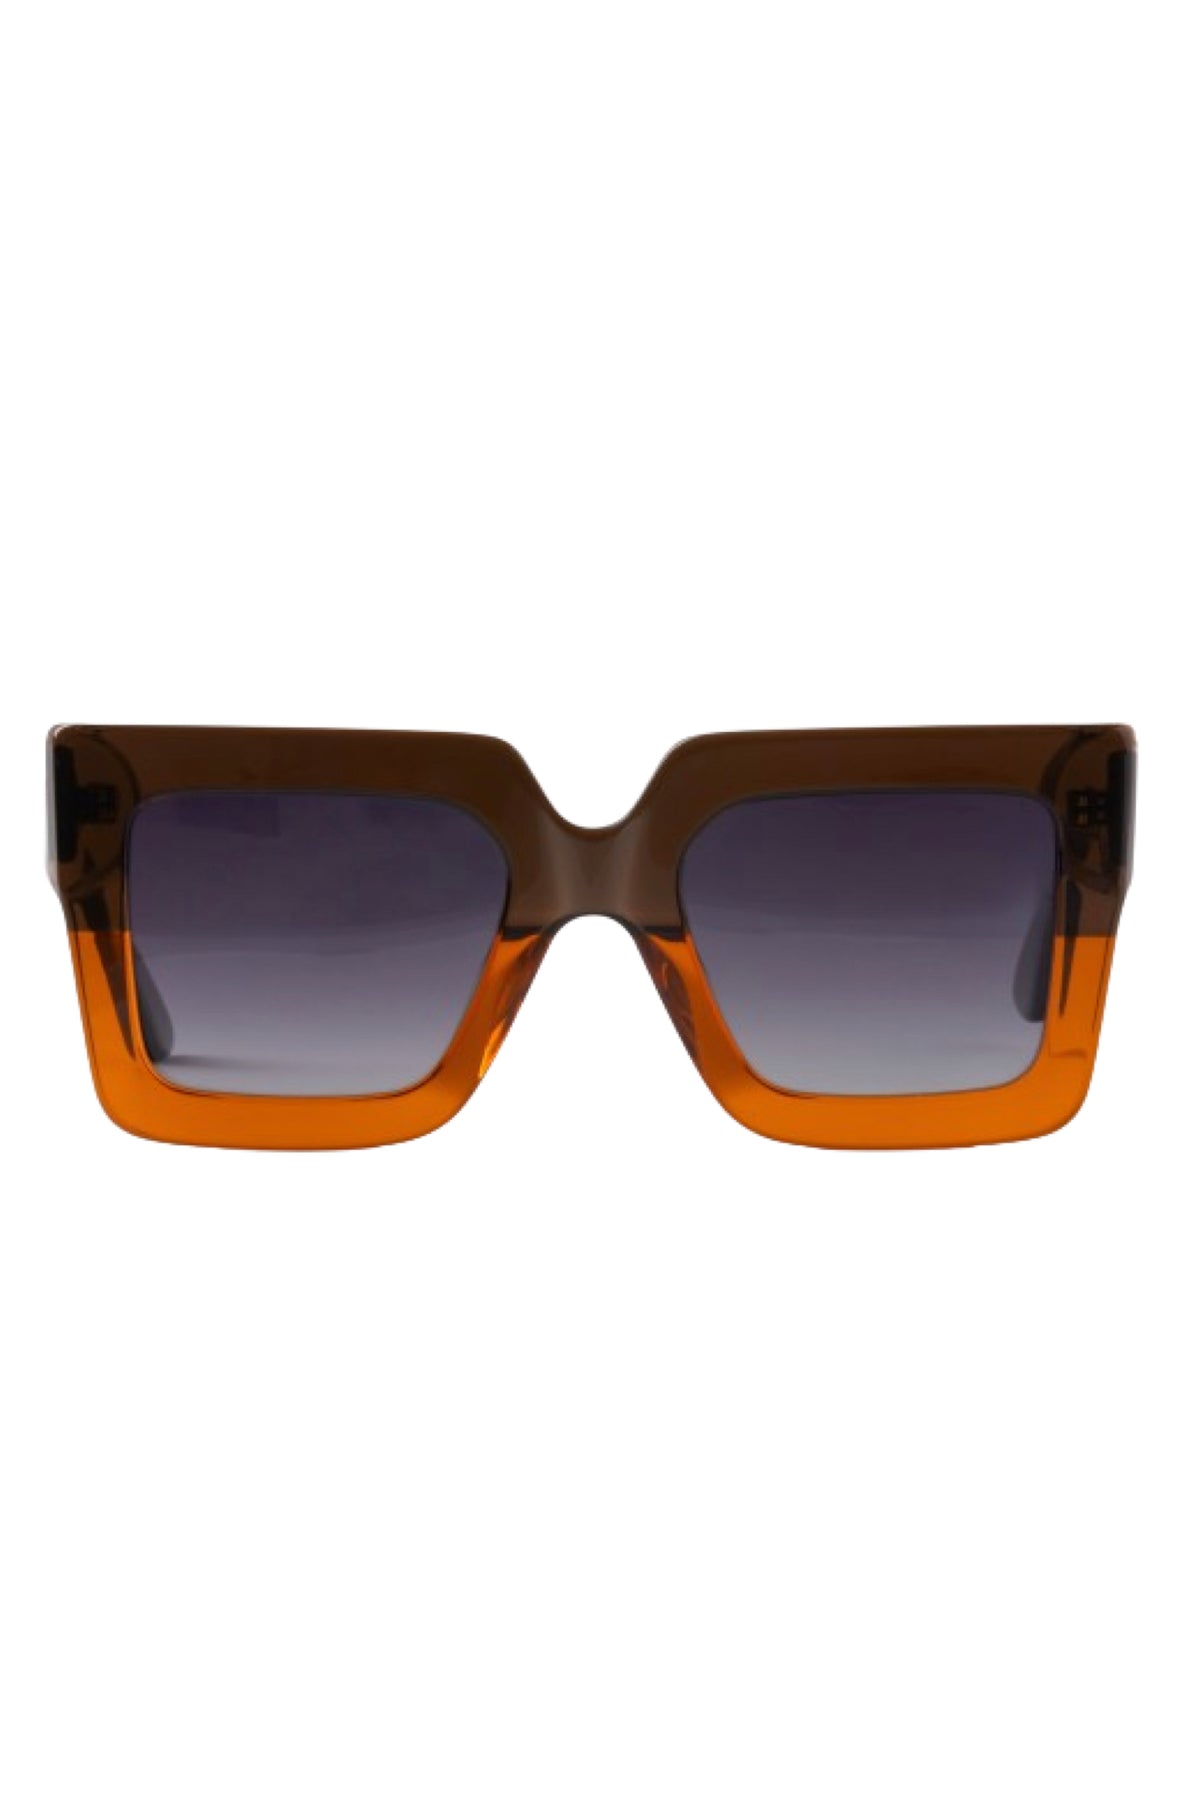 Harlow Burnt Orange Sunglasses